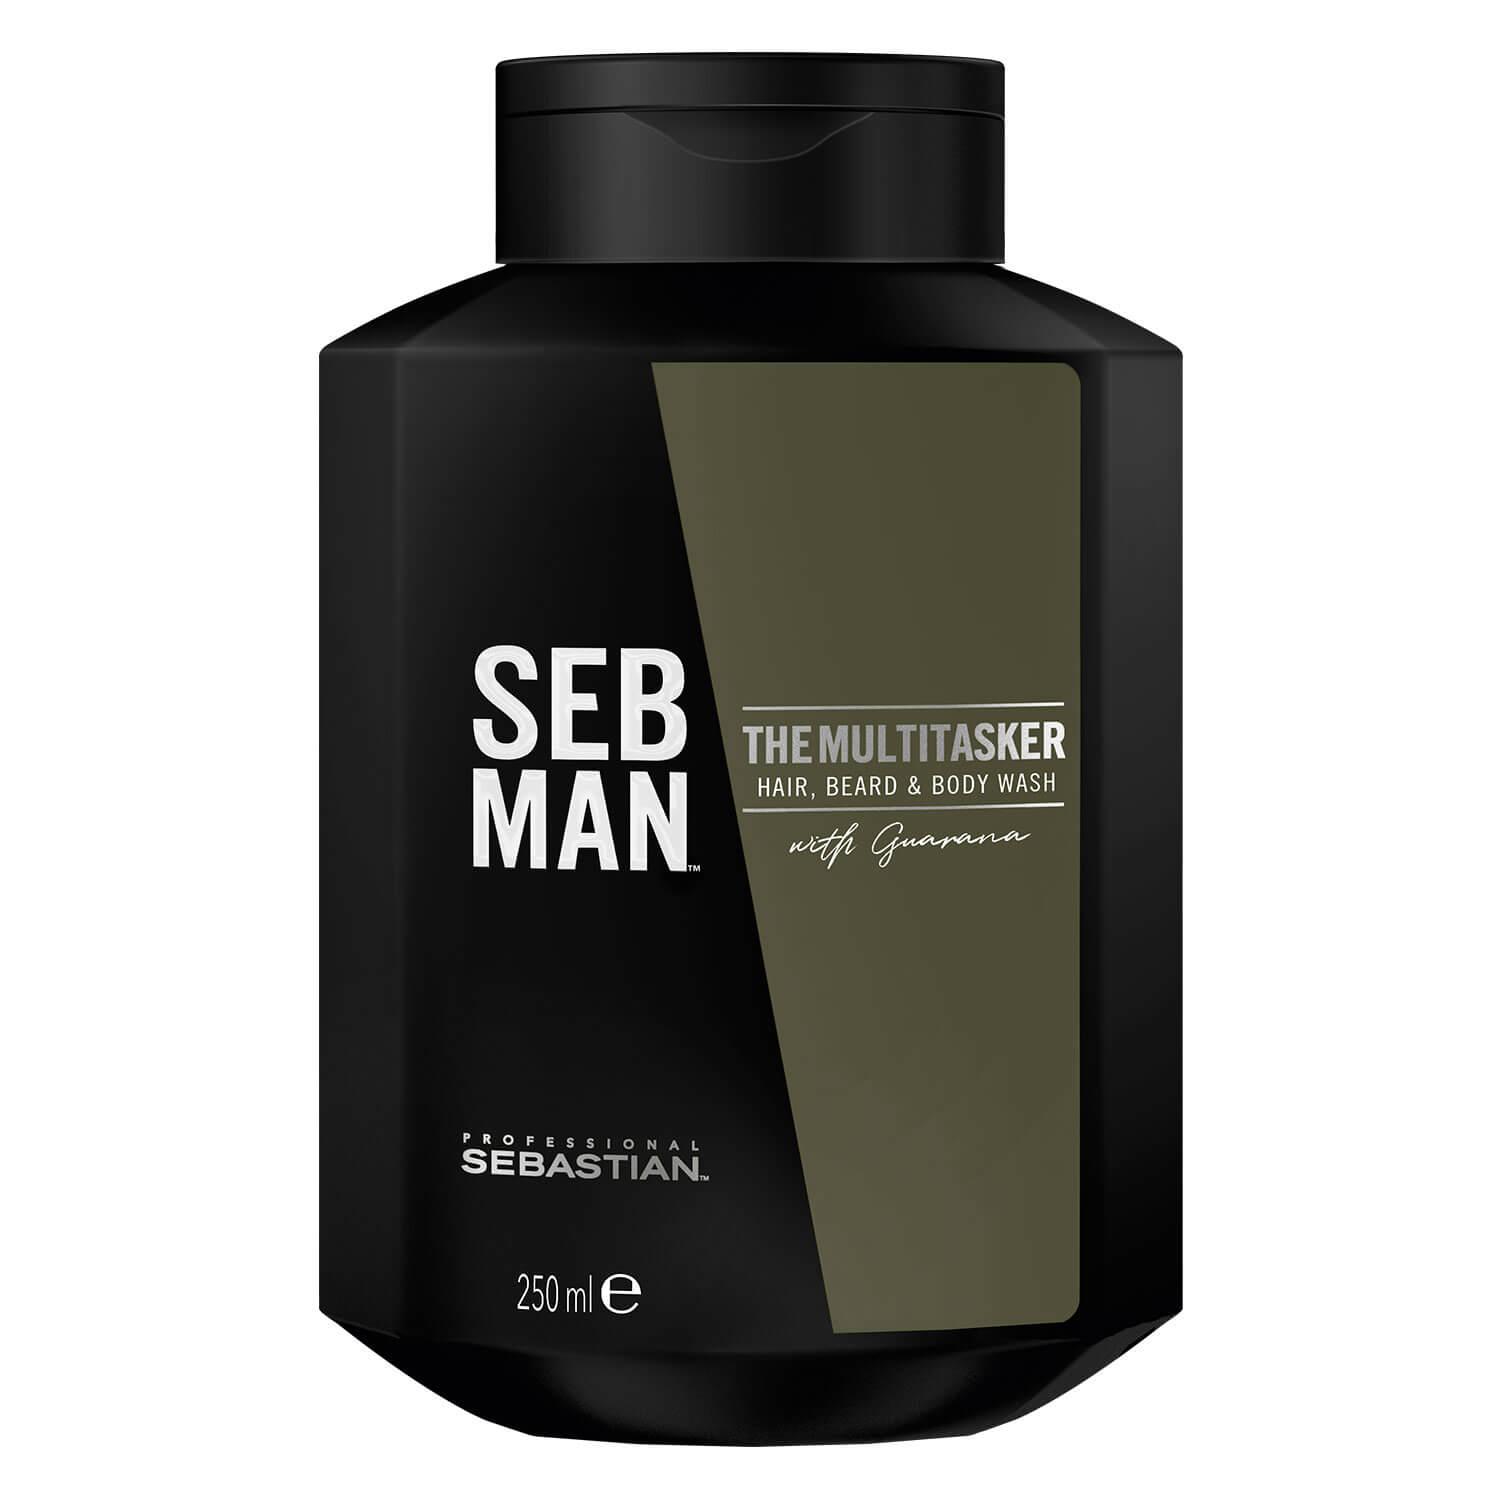 SEB MAN - The Multitasker Hair Beard & Body Wash